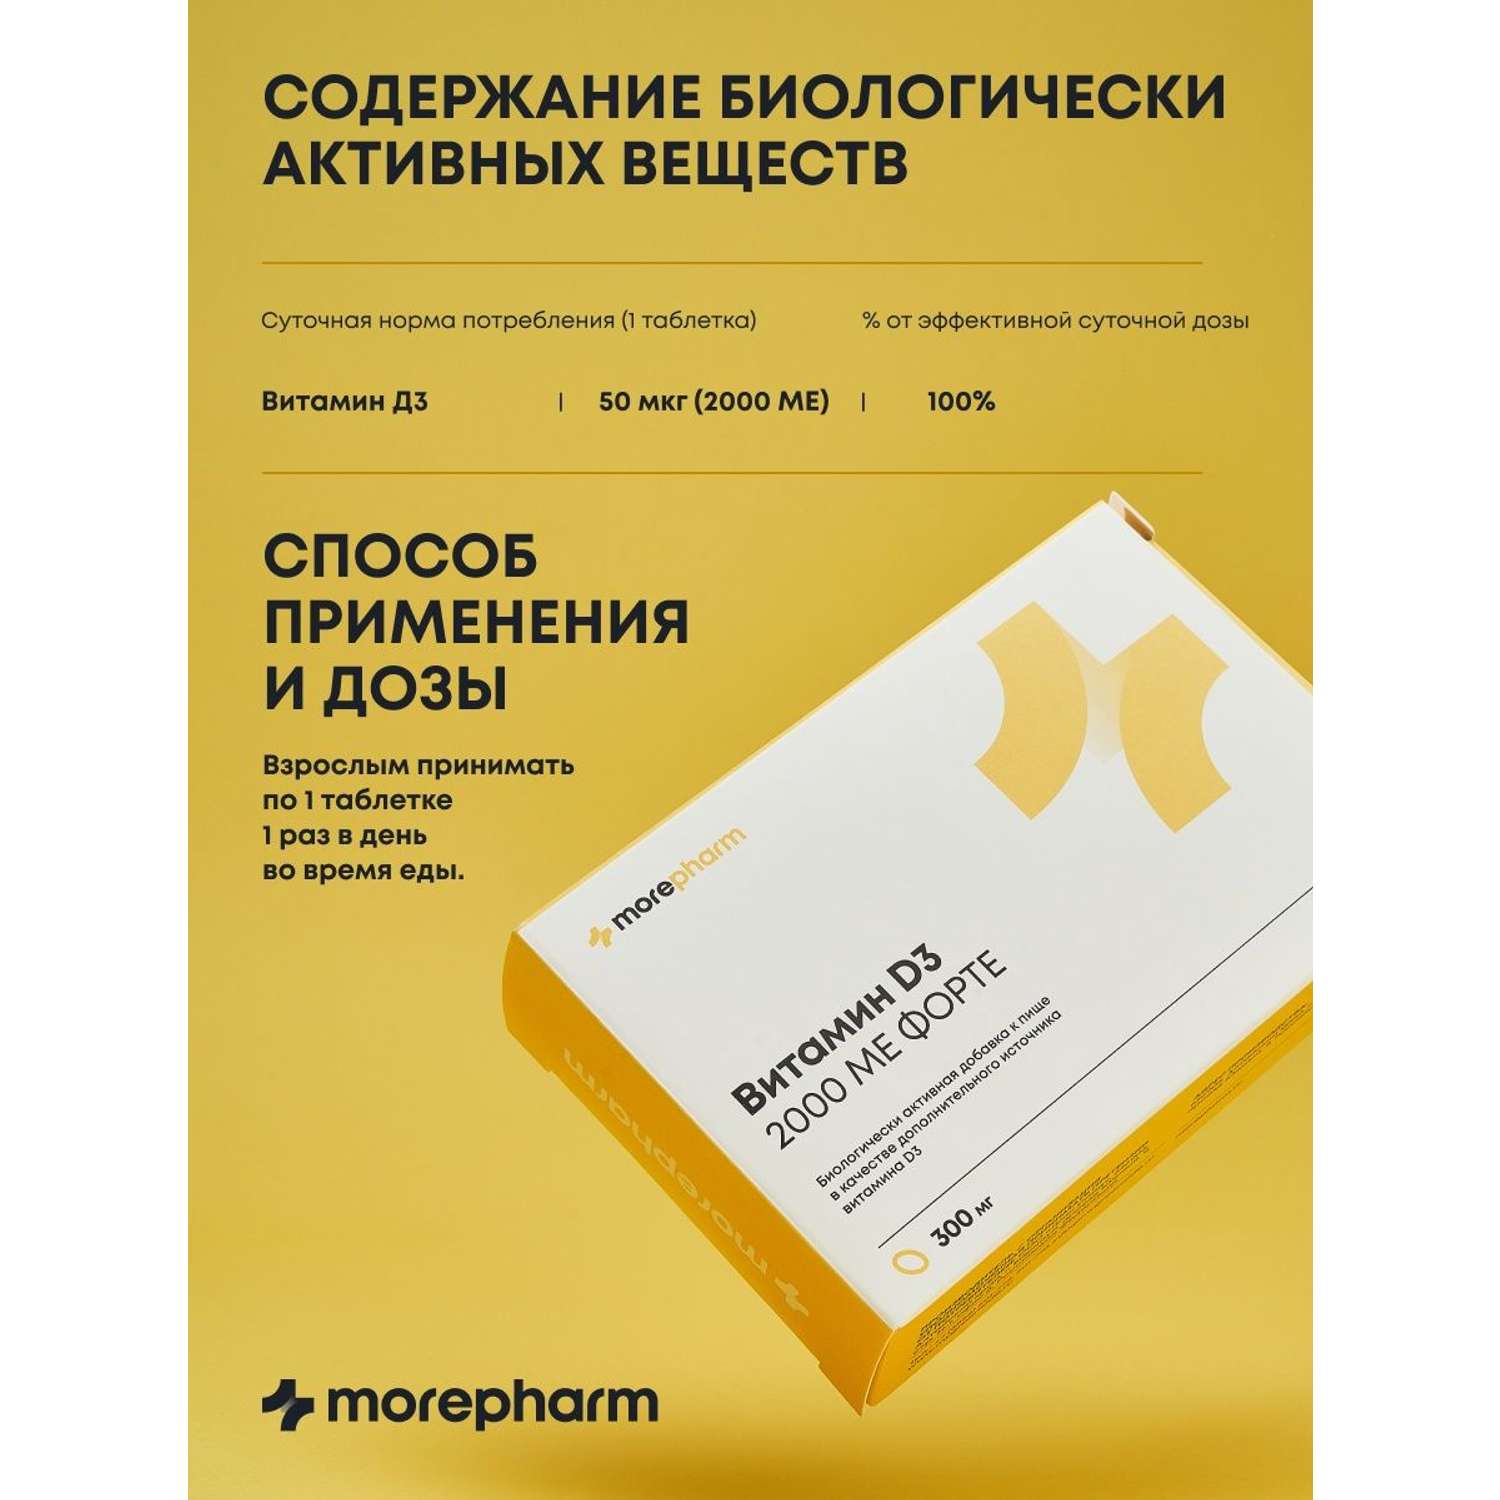 БАД morepharm Витамин Д3 2000 МЕ 60 капсул (vitamin d3 витамин д) - 2 шт - фото 8